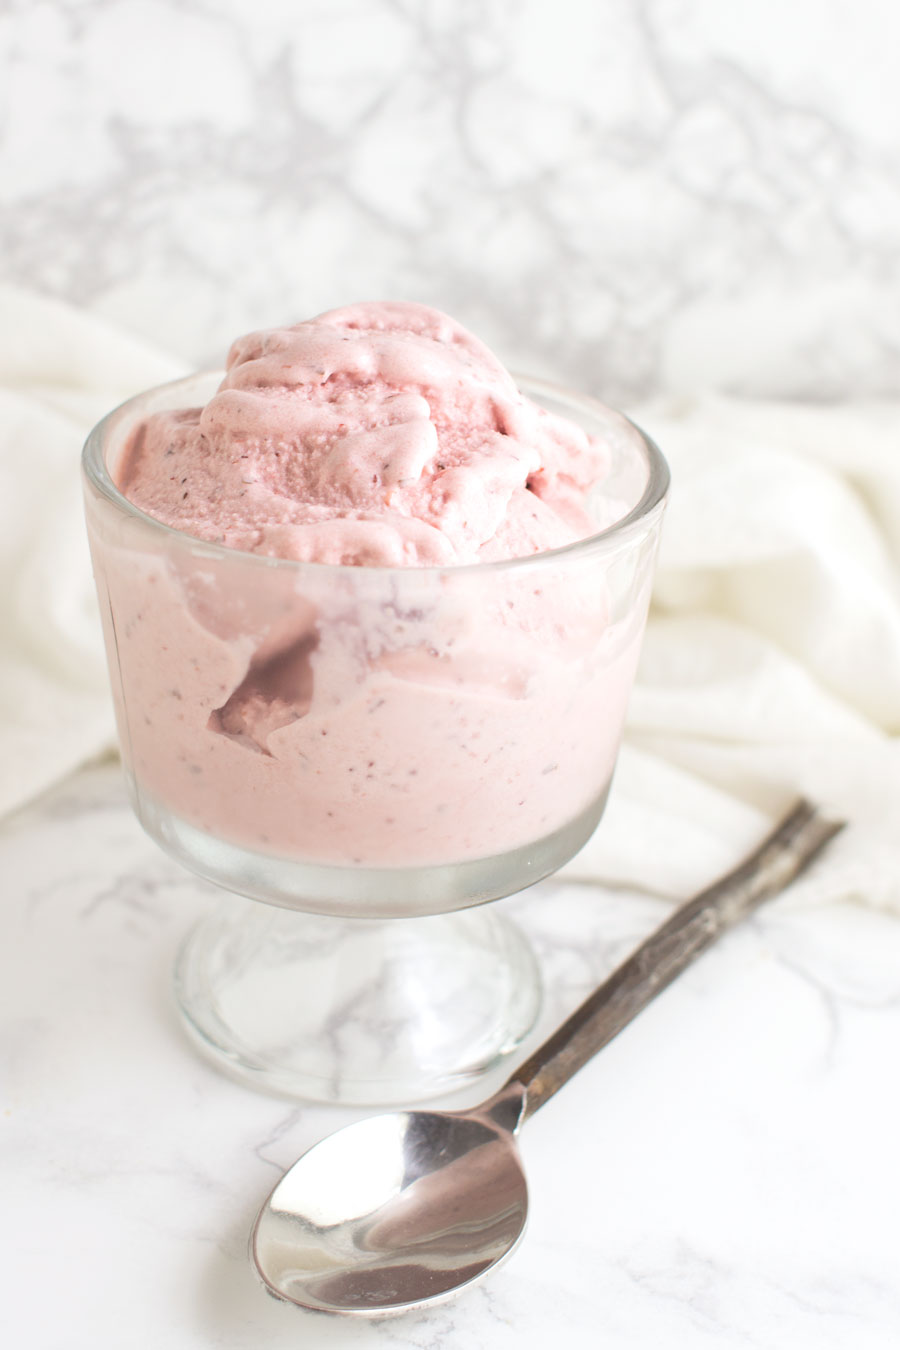 Strawberry Basil Balsamic Ice Cream recipe from acleanplate.com #paleo #aip #glutenfree